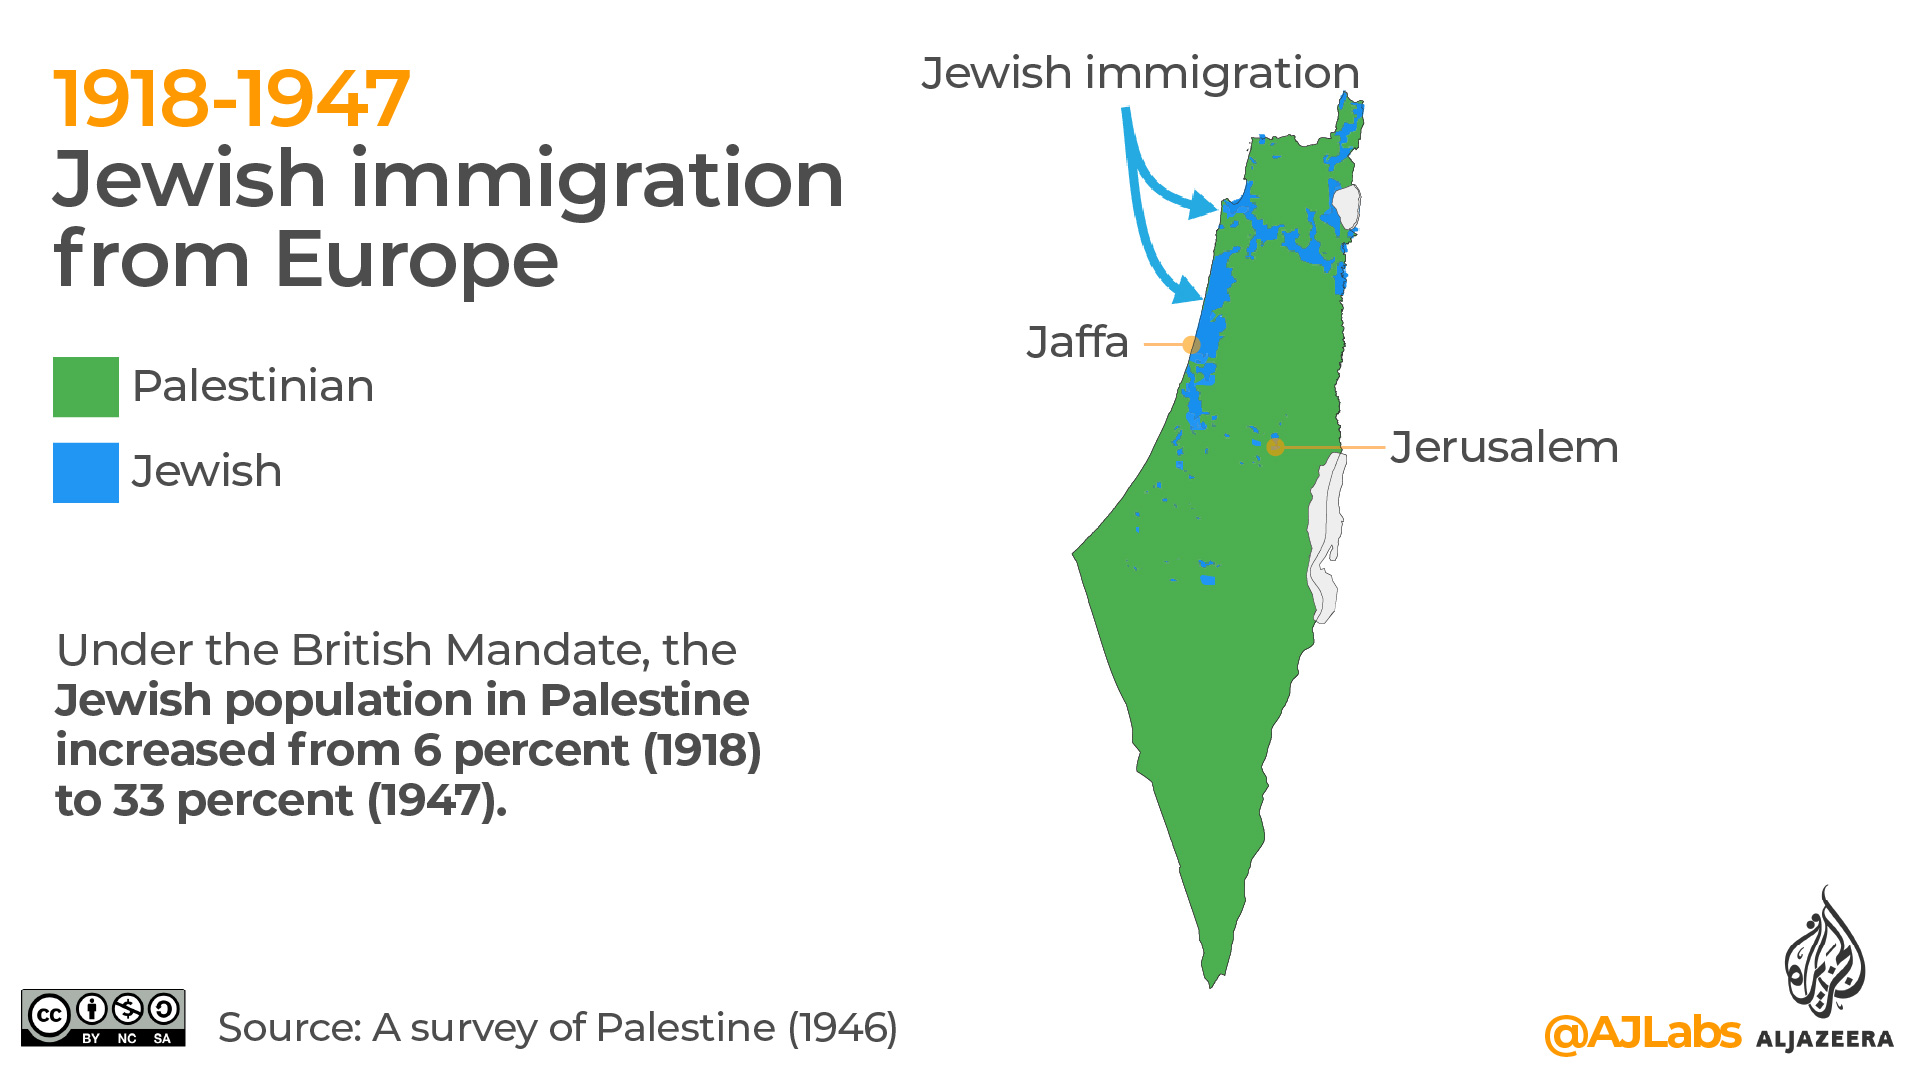 Palestine population